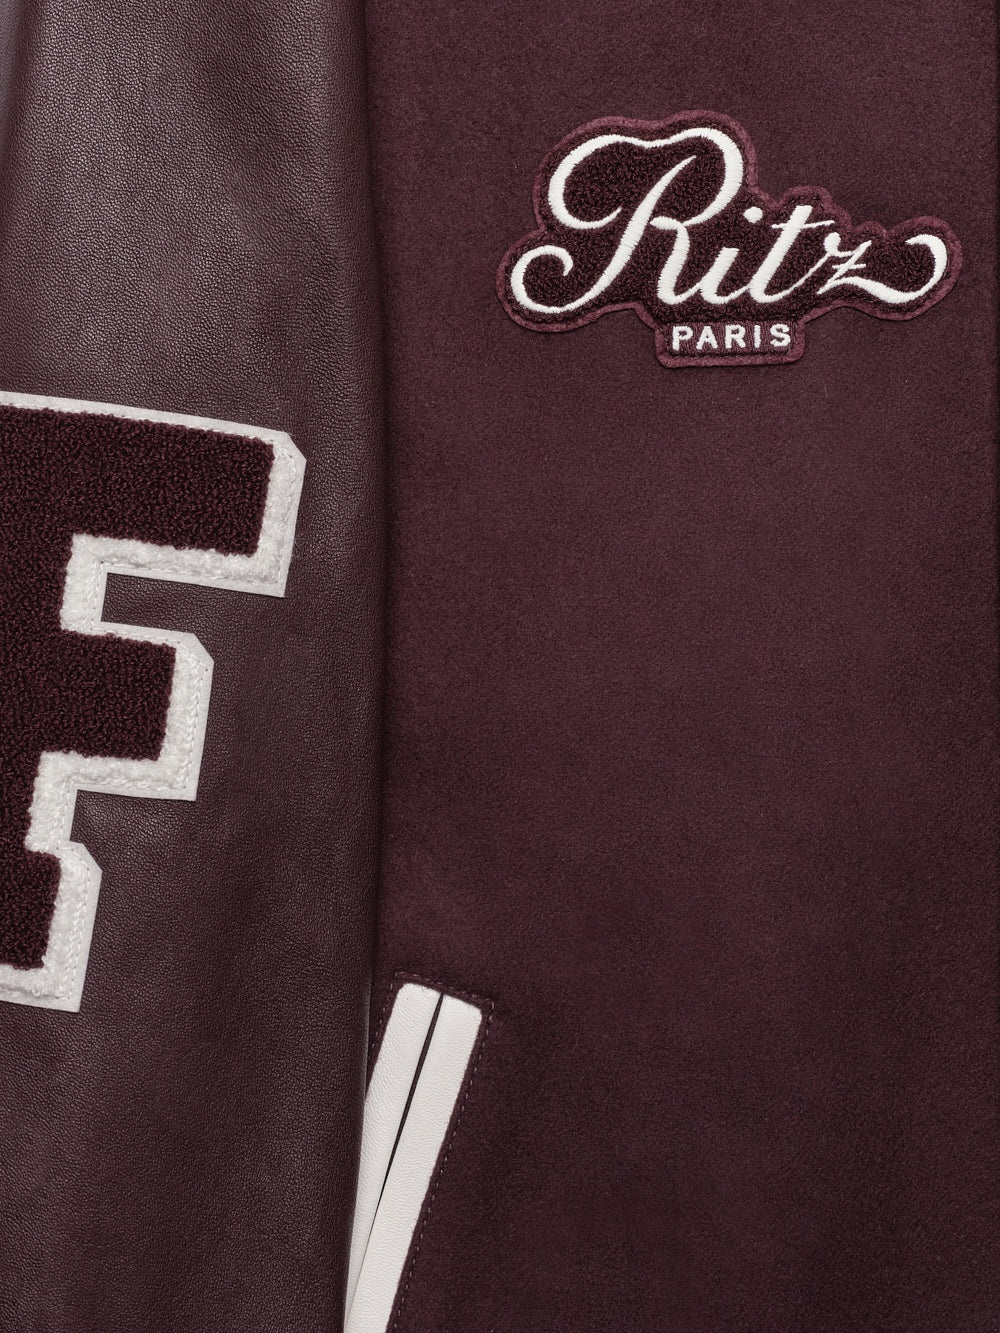 Ritz Unisex Varsity Jacket in Bordeaux - 2